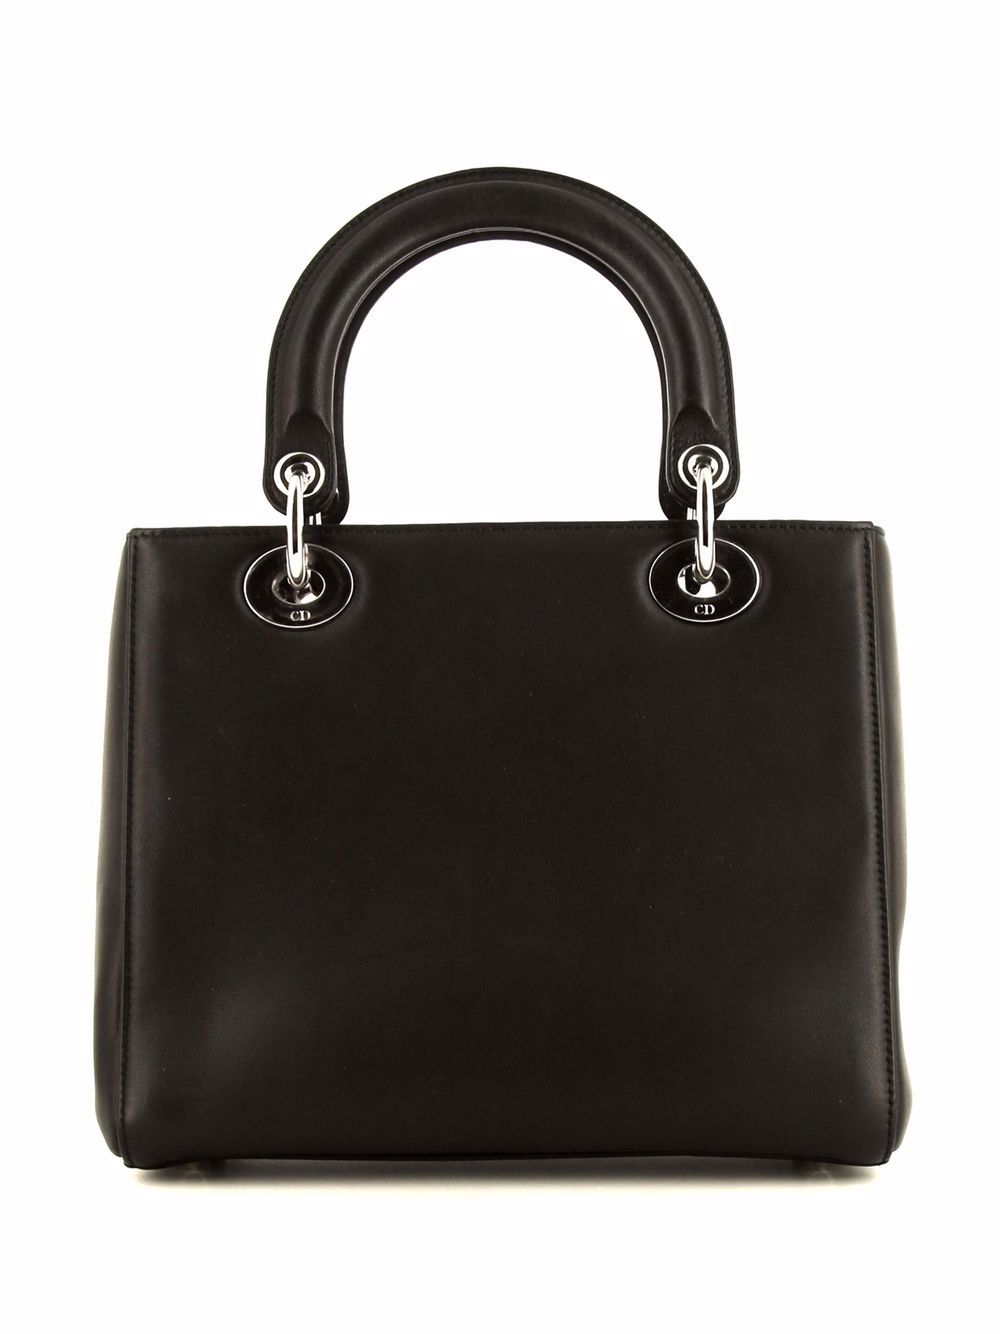 Christian Dior medium Lady Dior handbag